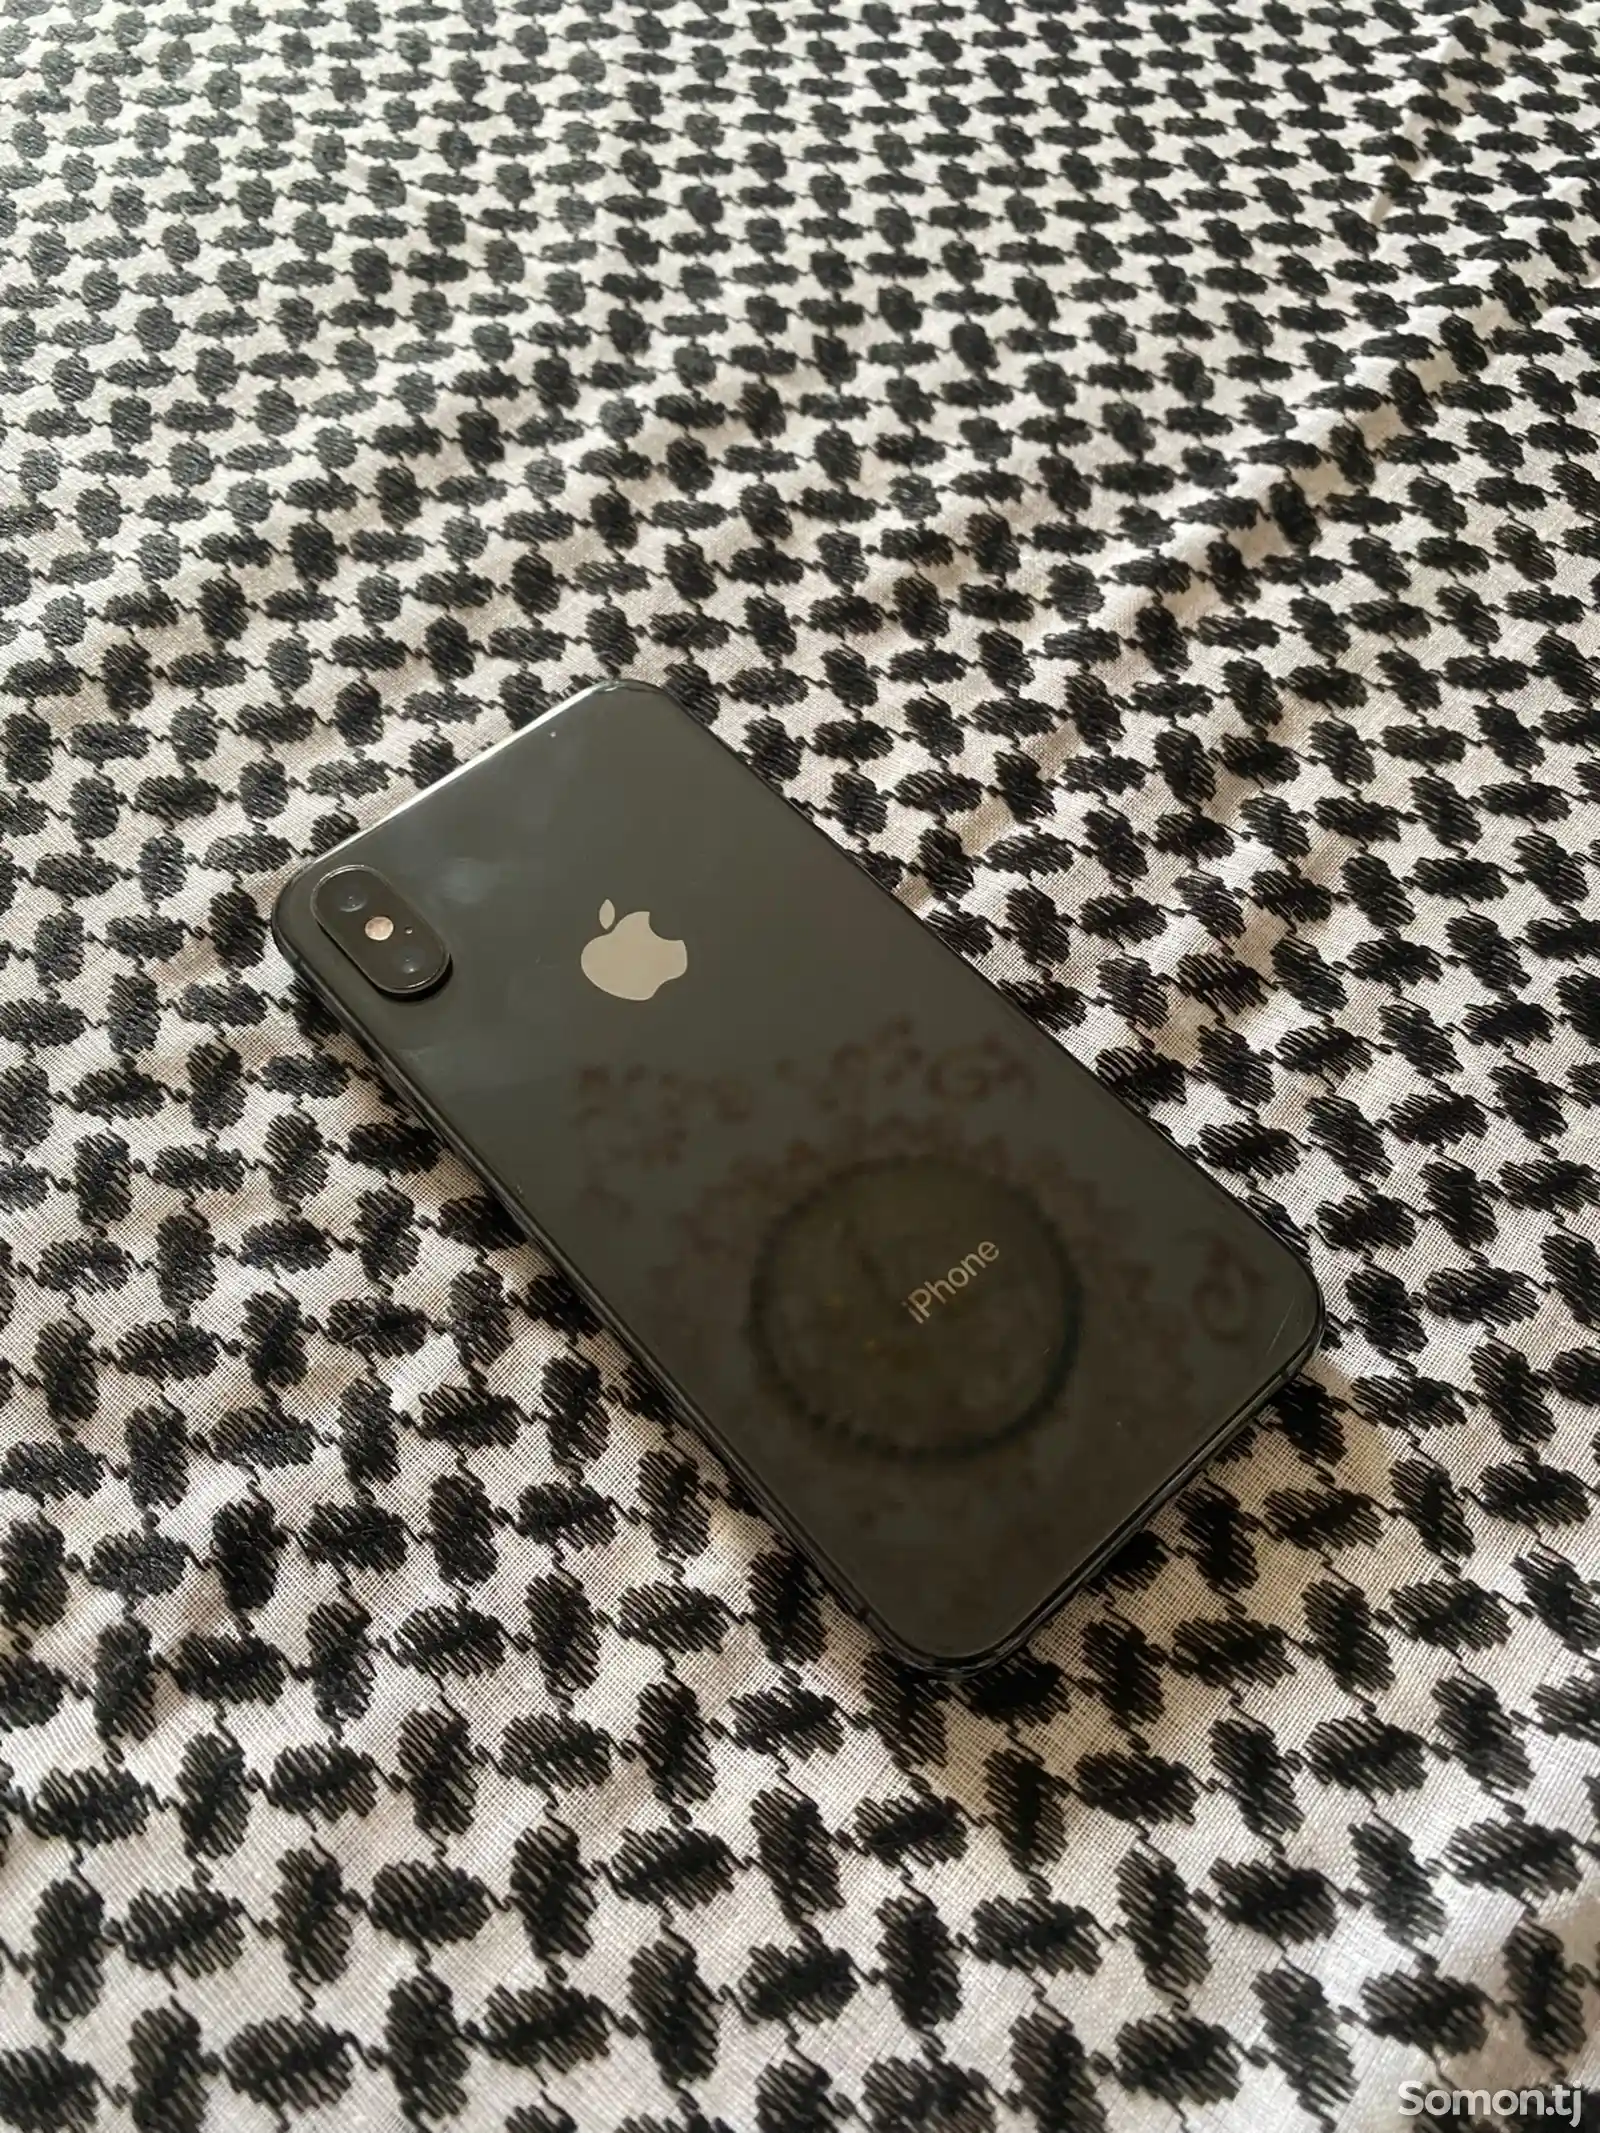 Apple iPhone Xs, 64 gb, Silver-2